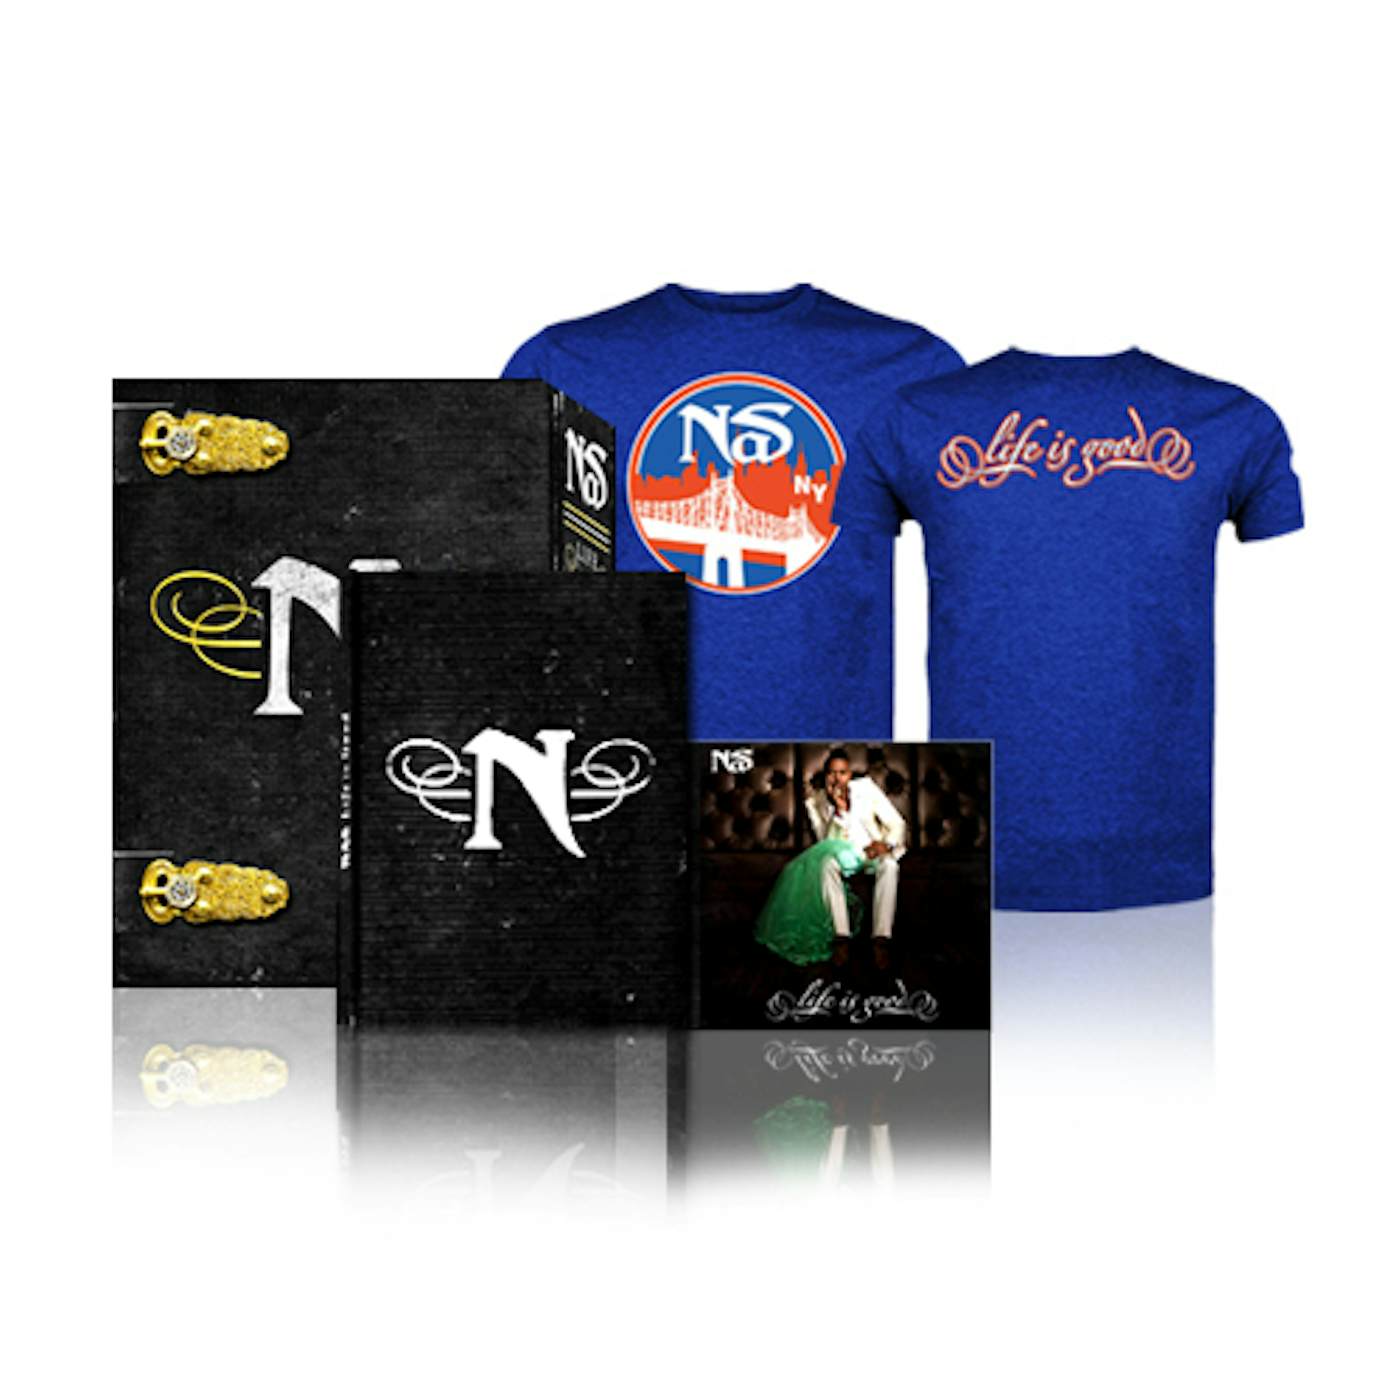 Nas - Life Is Good Collector’s Box Set